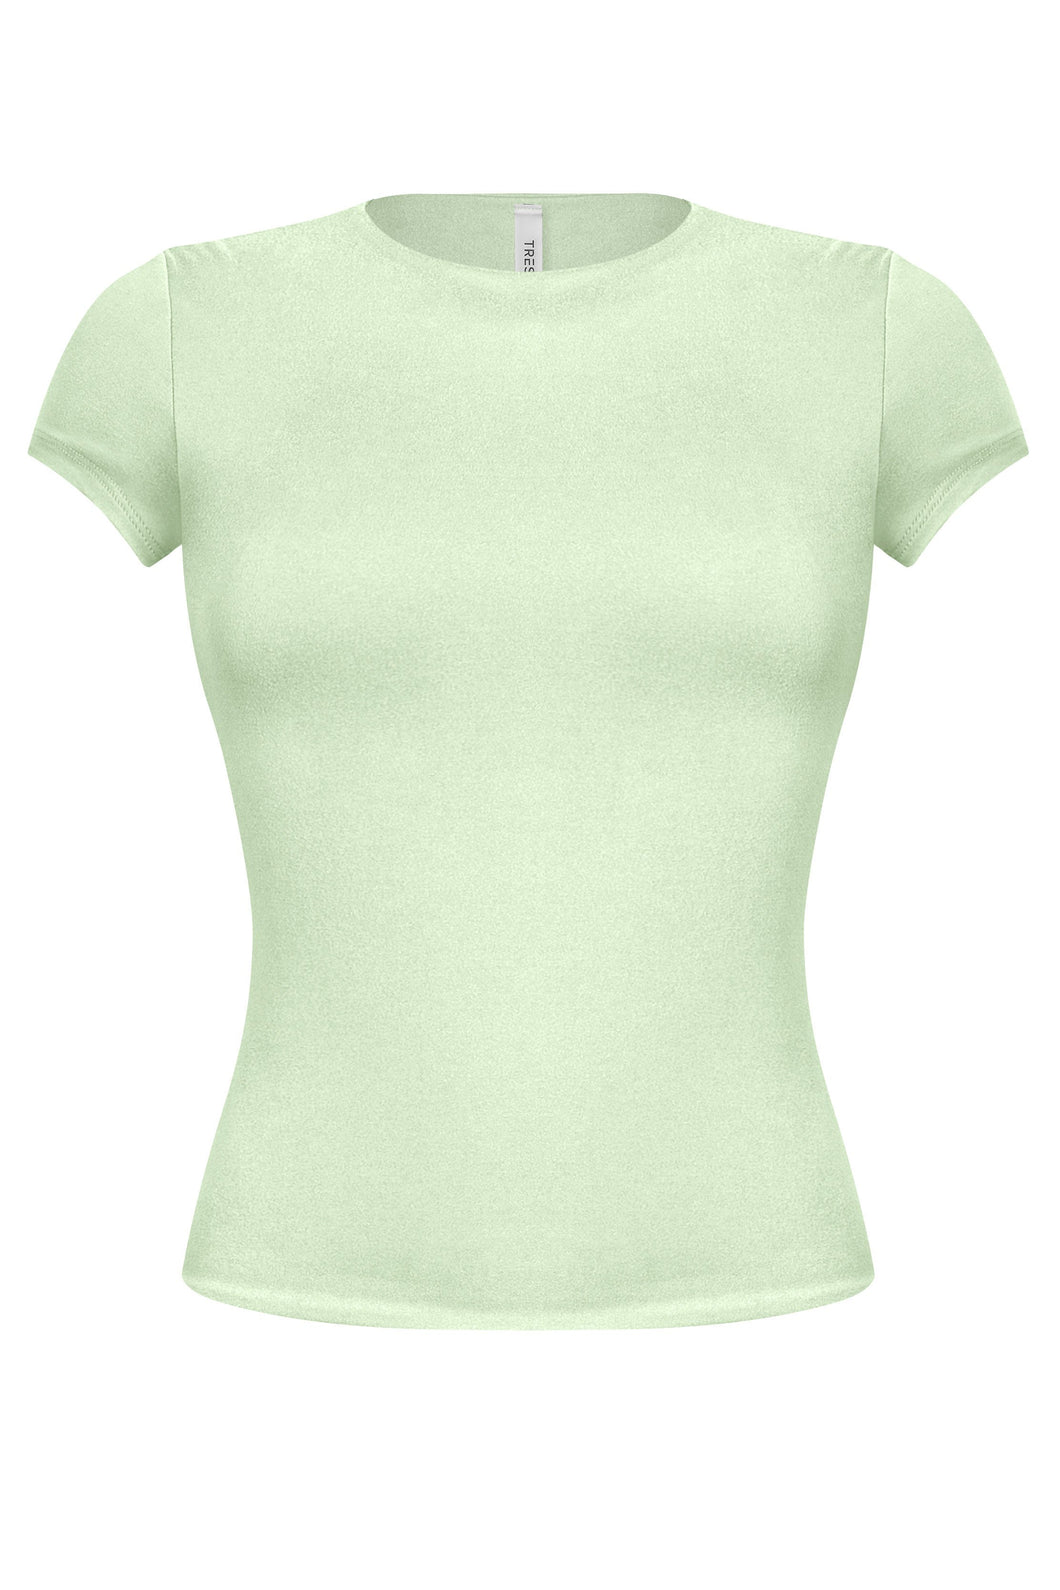 Ginny Short Sleeve Basic Top (Sage Green)